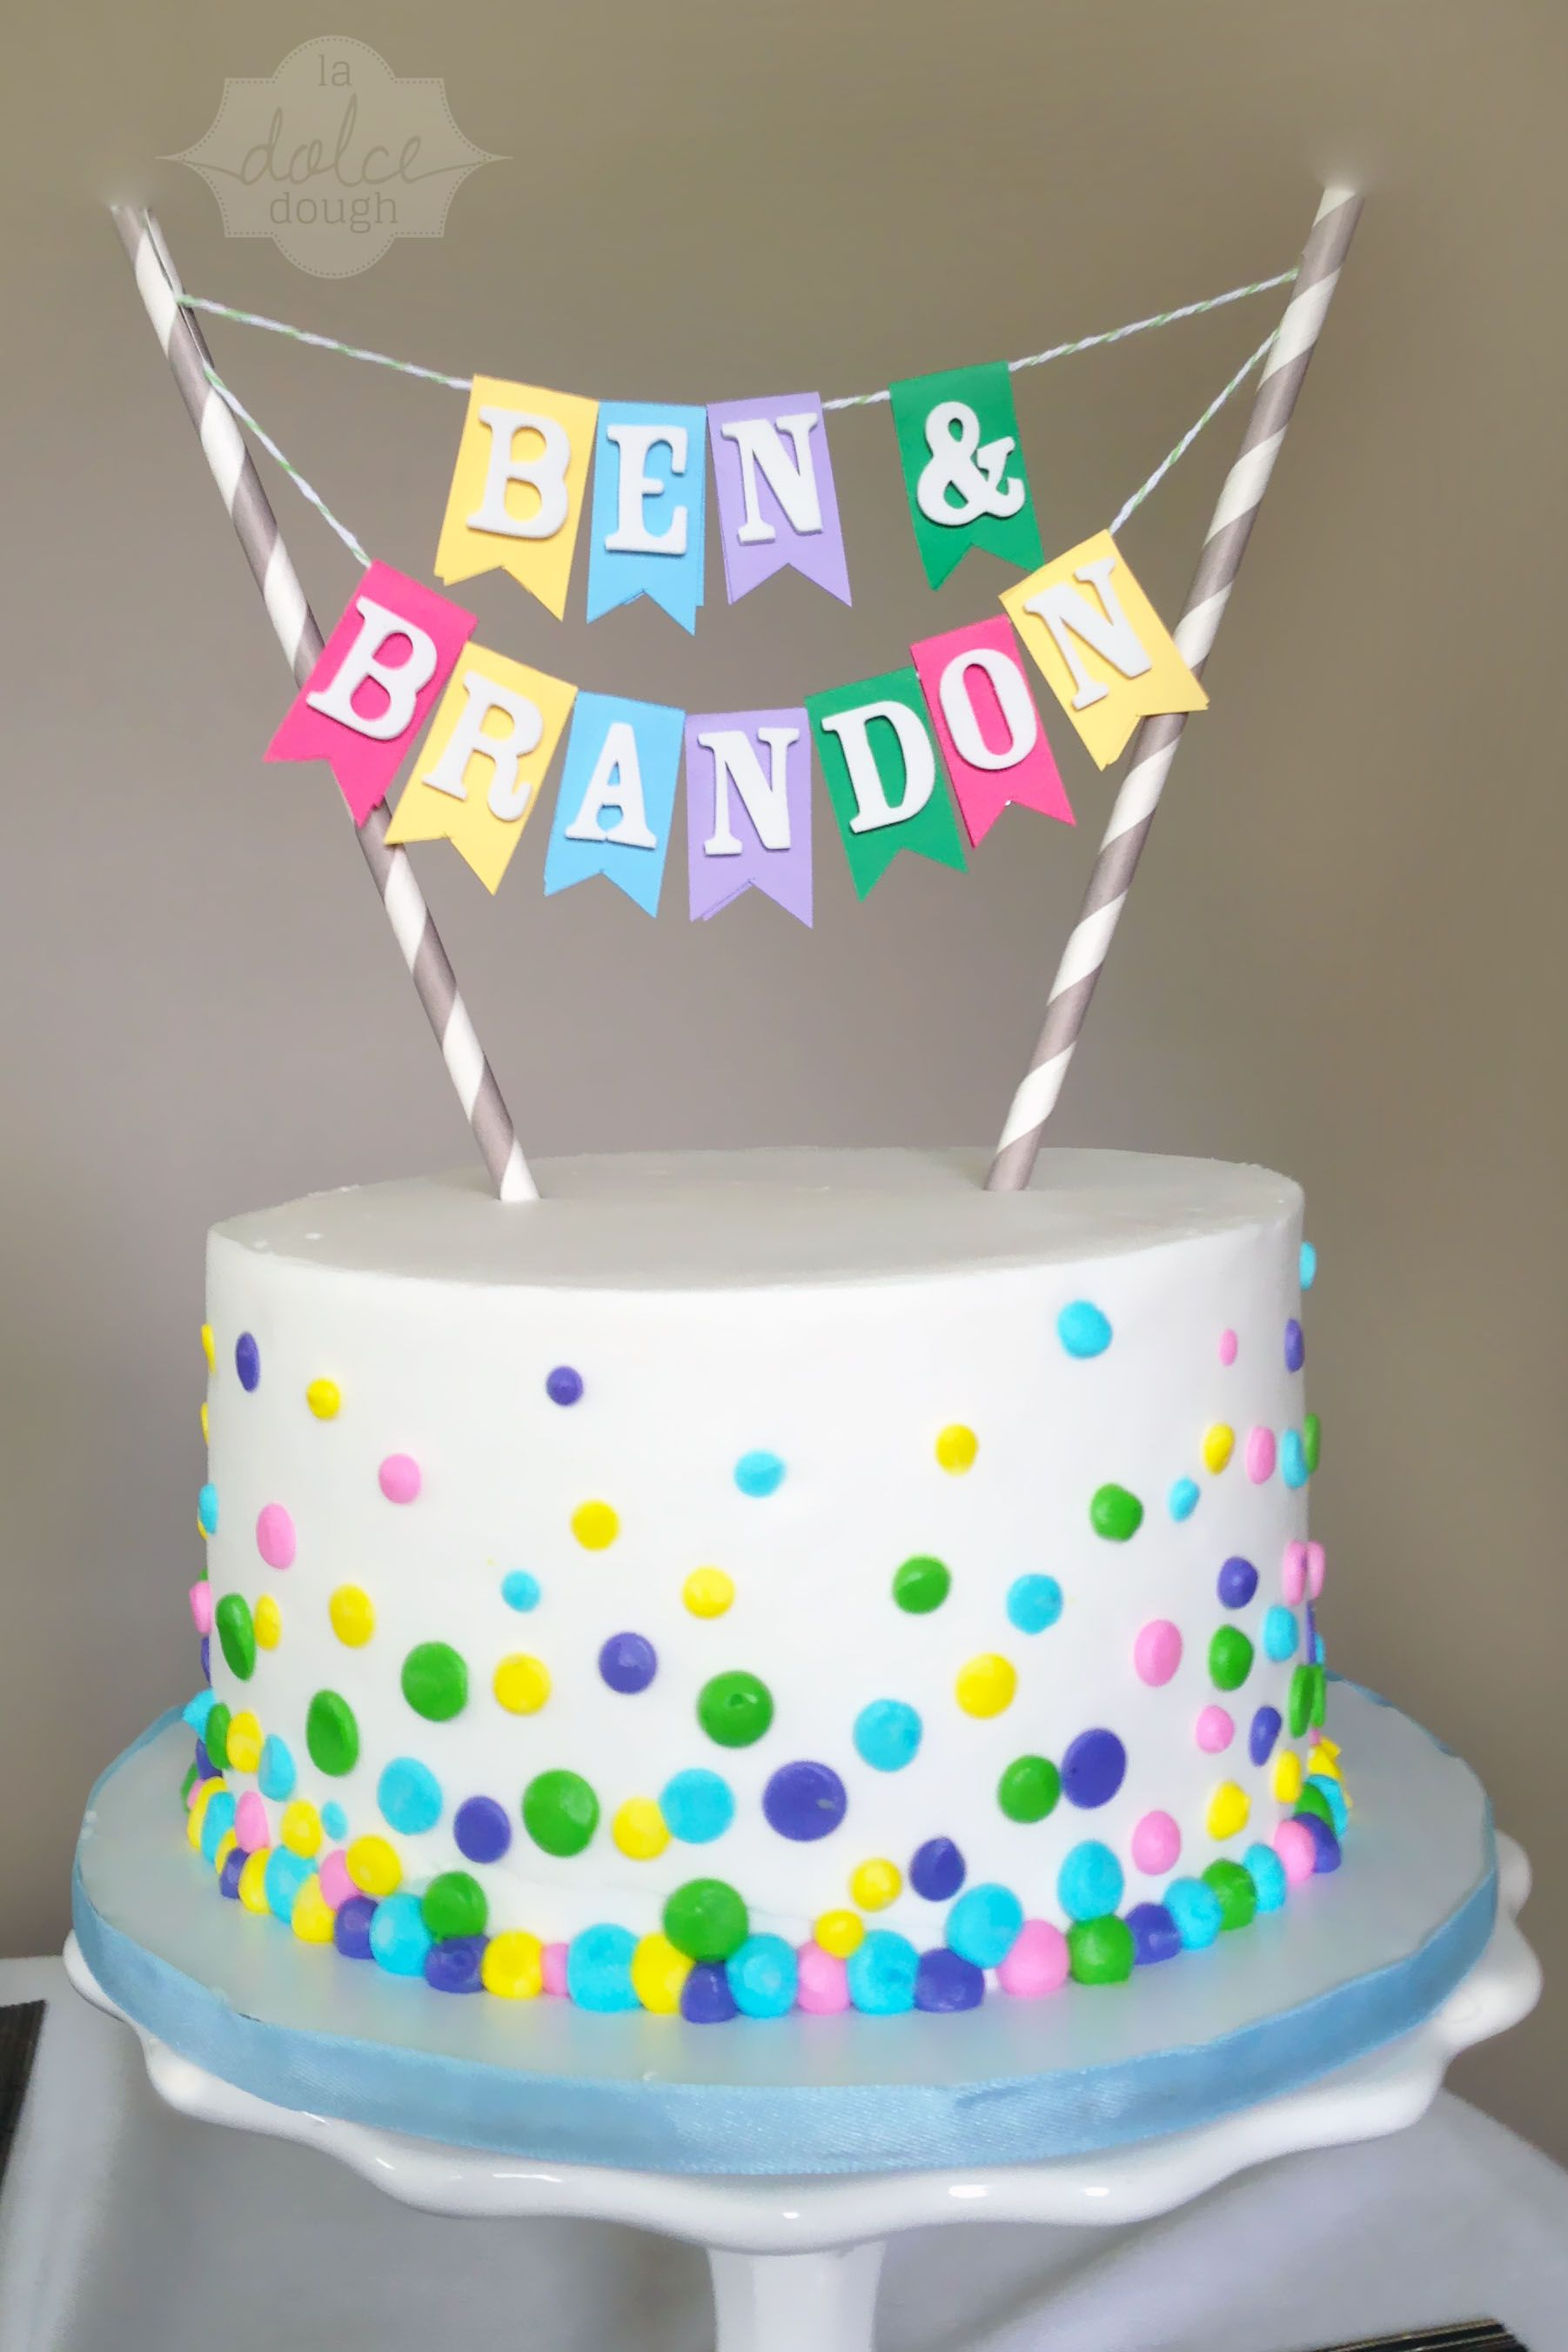 Happy Birthday Twins Cake Confetti Cake For A Twins Birthday Birthday Desserts Birthday